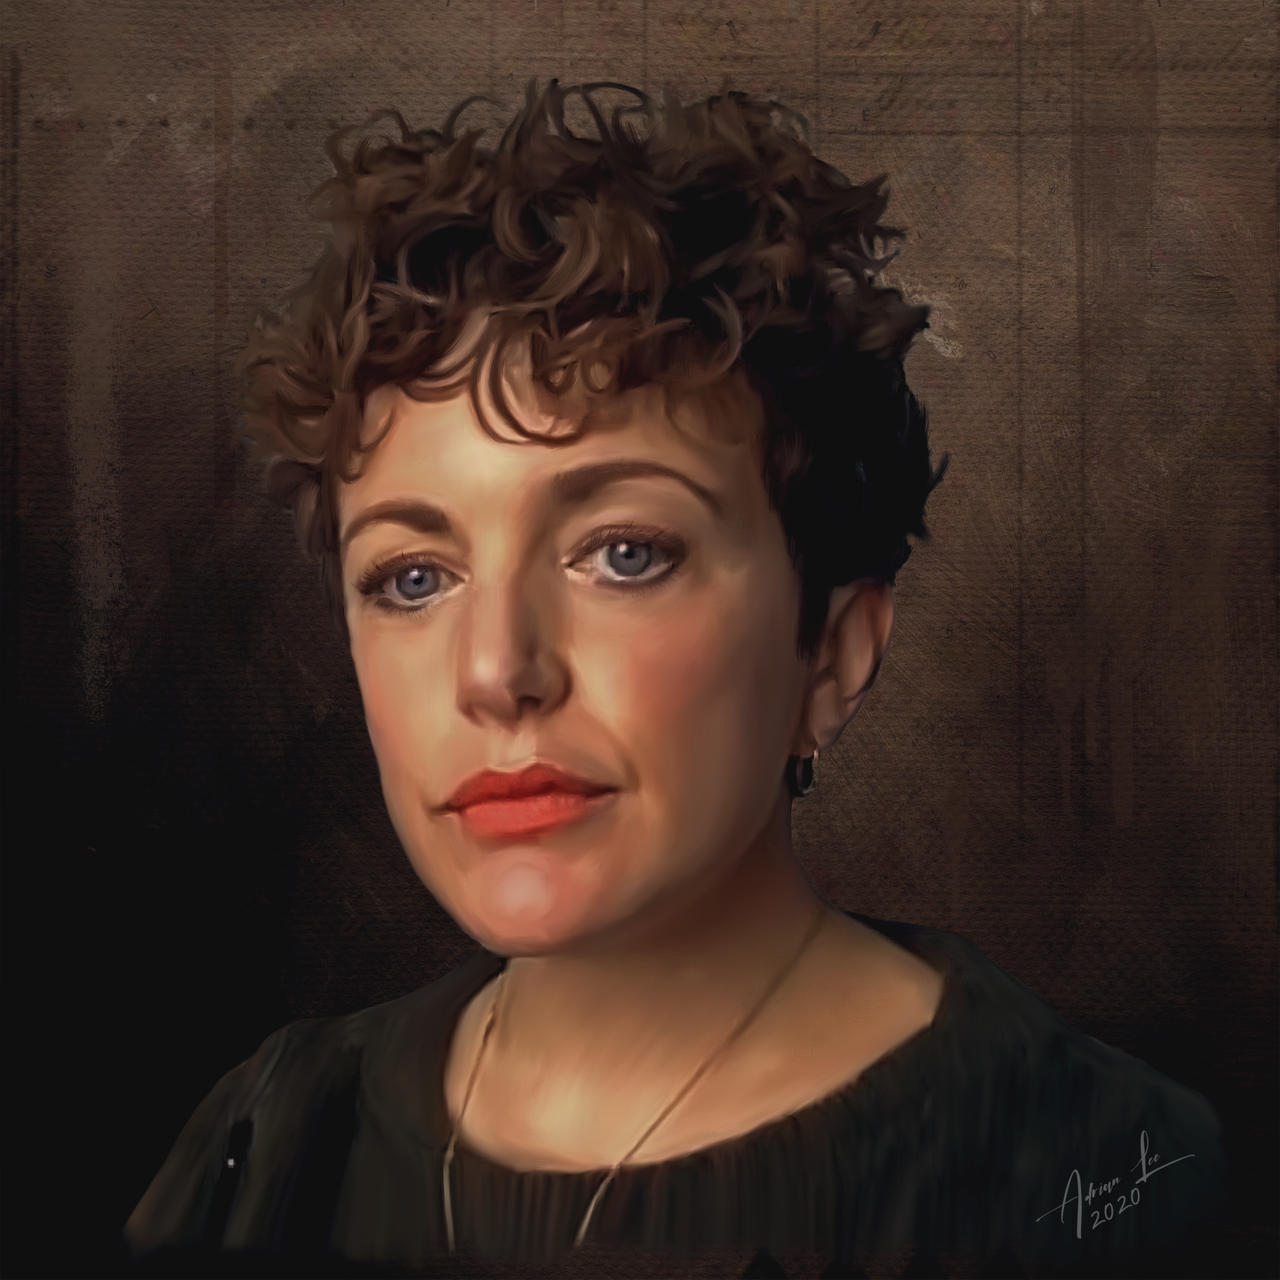 Beth Harmon realistic portrait by PruPruDraws on DeviantArt